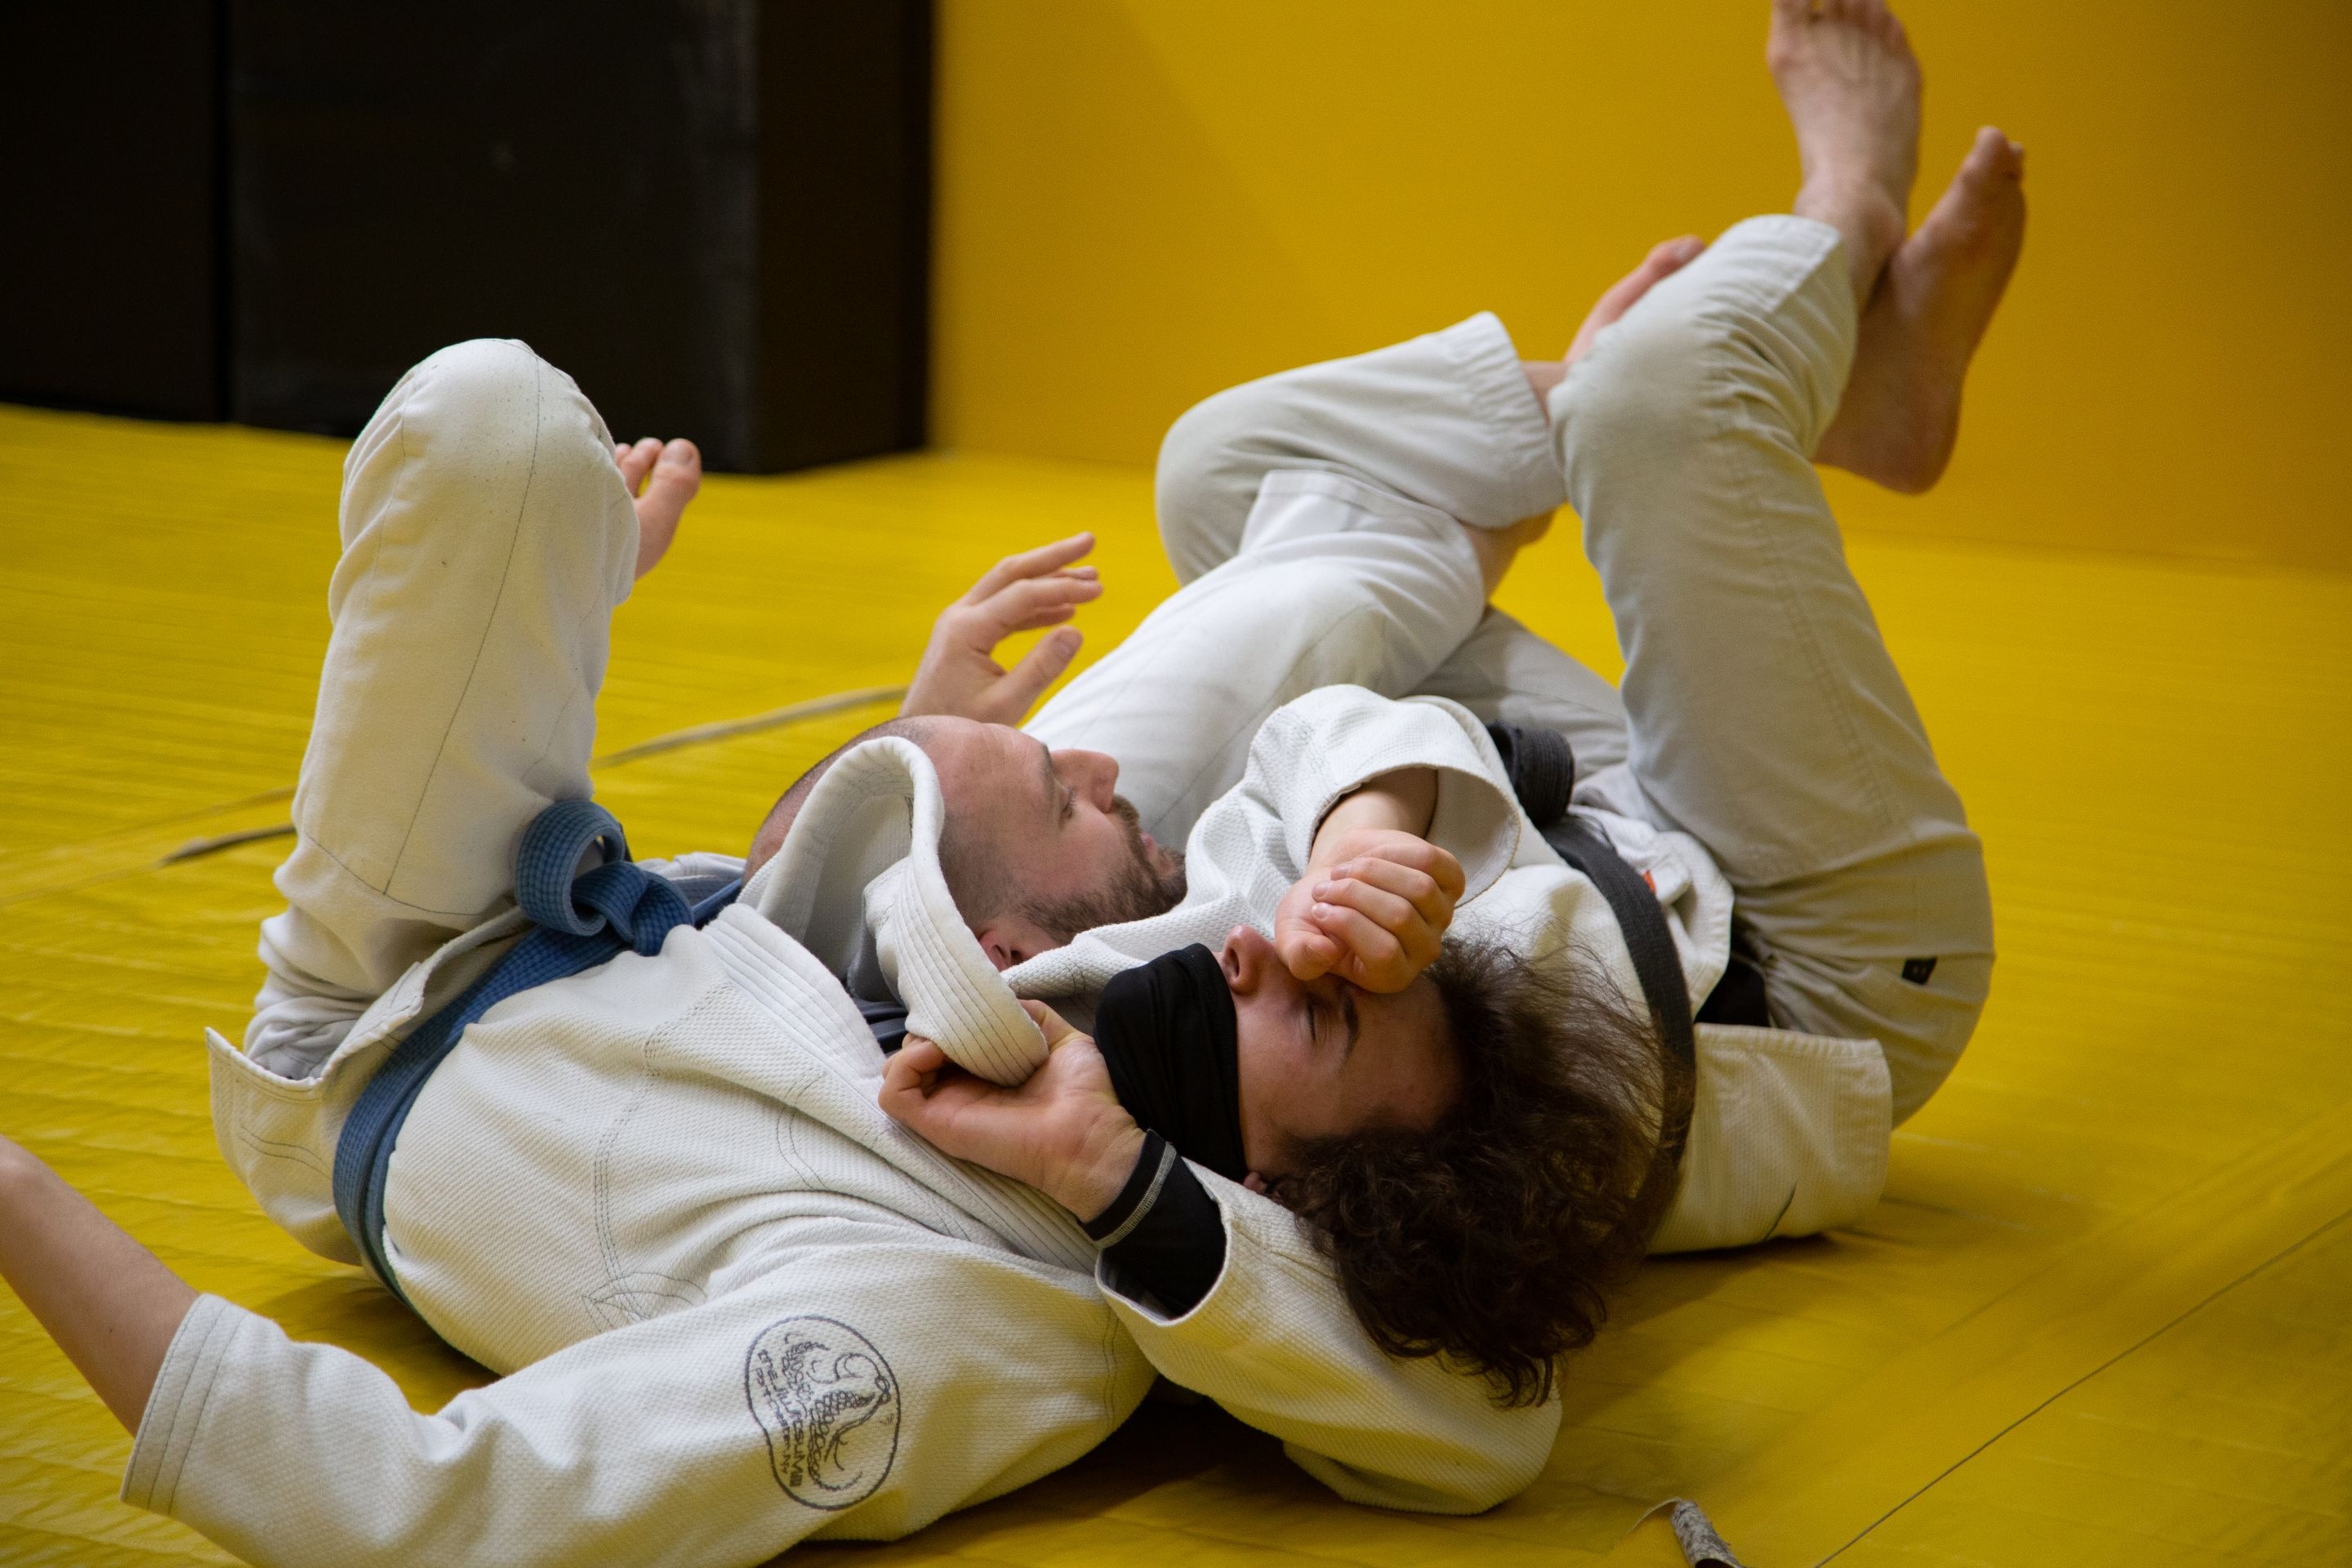 Jiu-jitsu: Combat sports training process at The Jiu Jitsu Mill school, Martial Arts in New York. 2880x1920 HD Wallpaper.